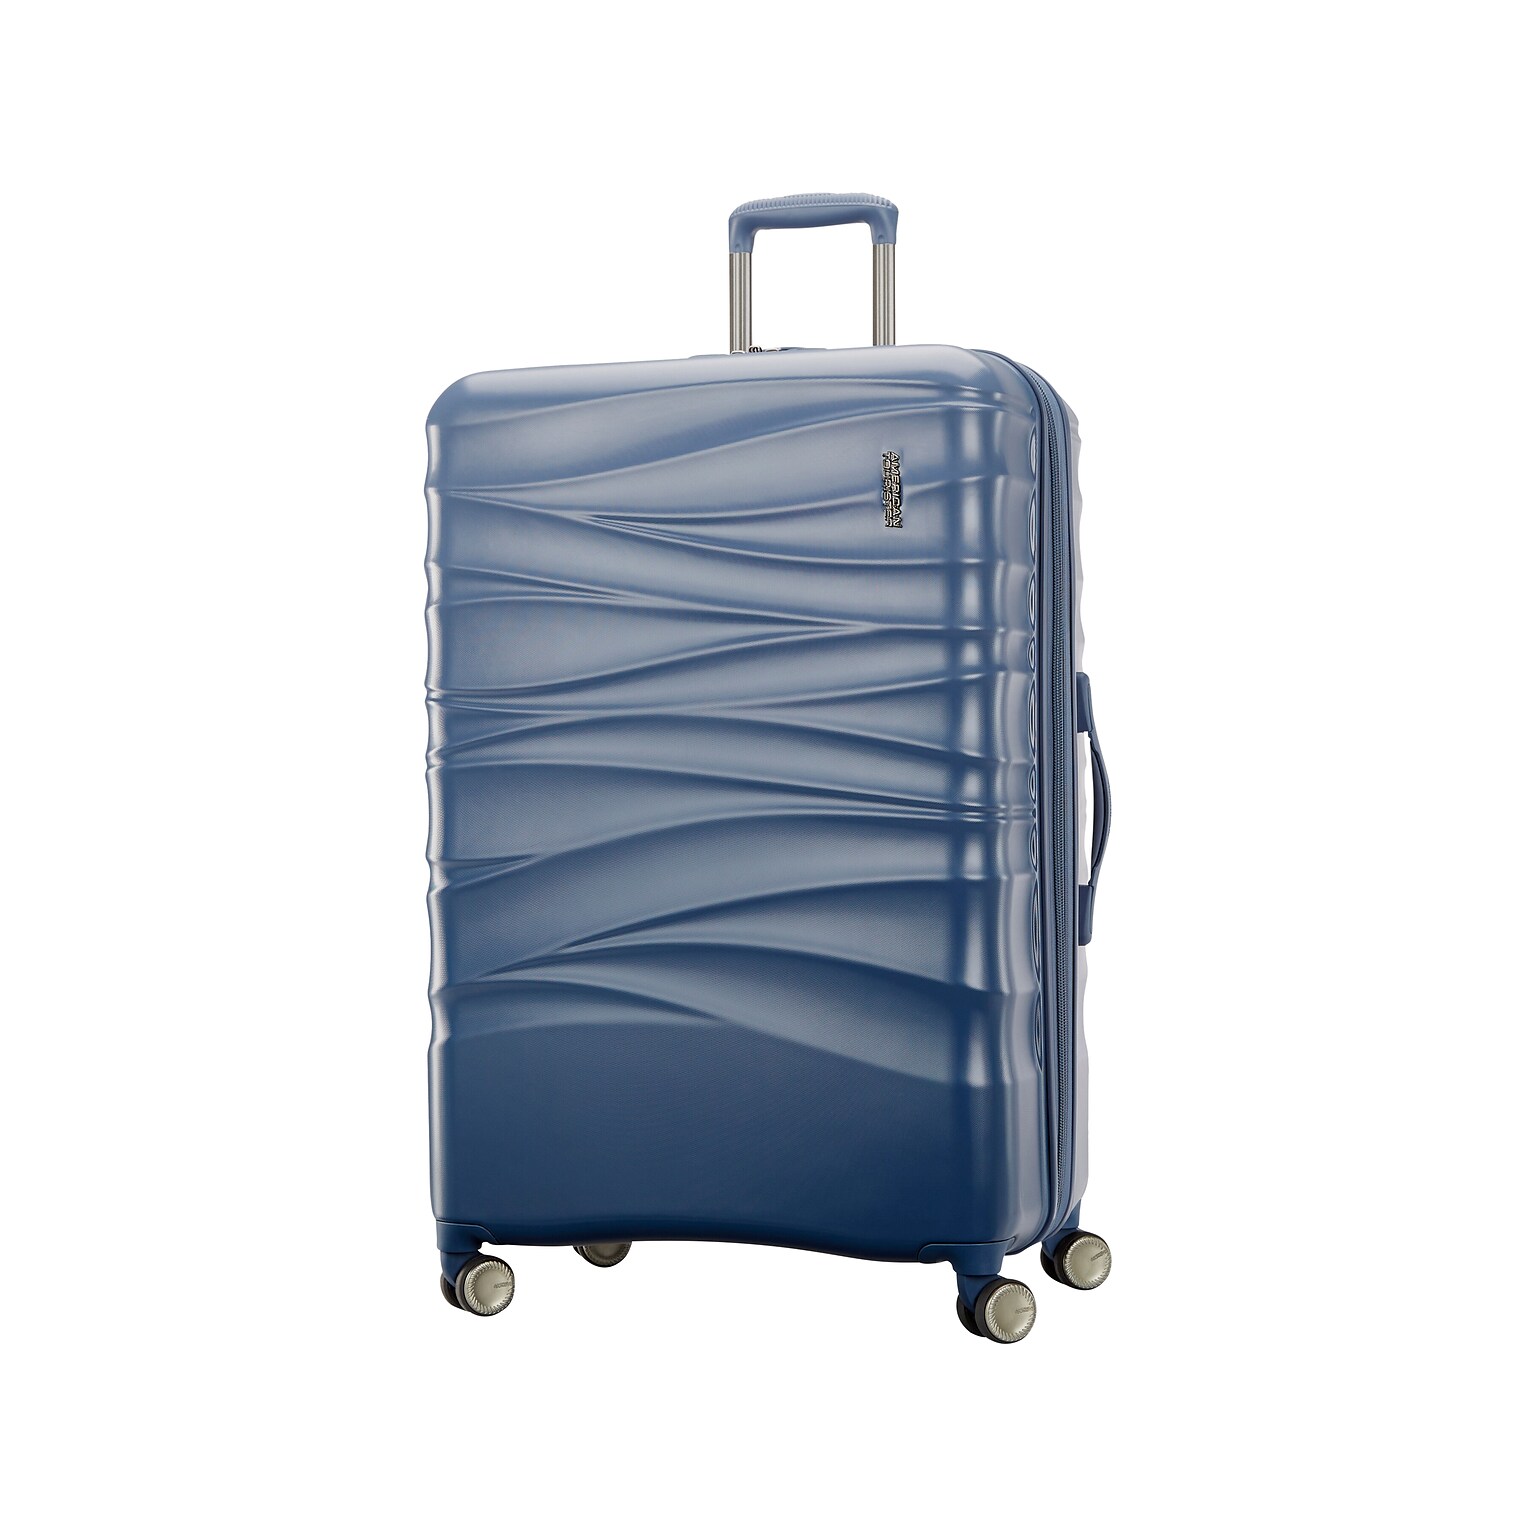 American Tourister Cascade 31 Hardside Suitcase, 4-Wheeled Spinner, Slate Blue (143314-E264)